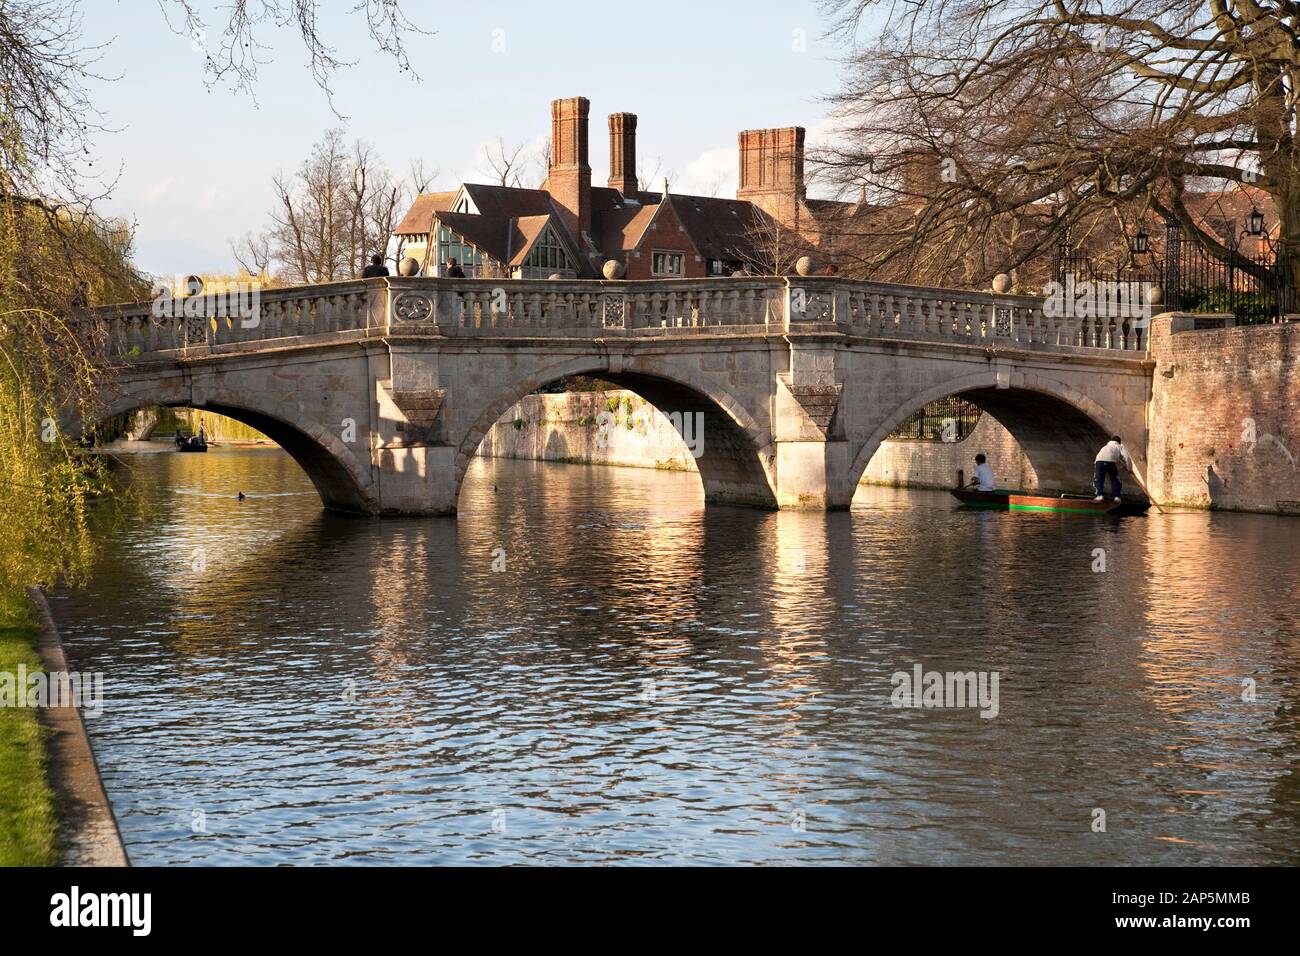 Clare College bridge over the river Cam, Cambridge, England. Stock Photo